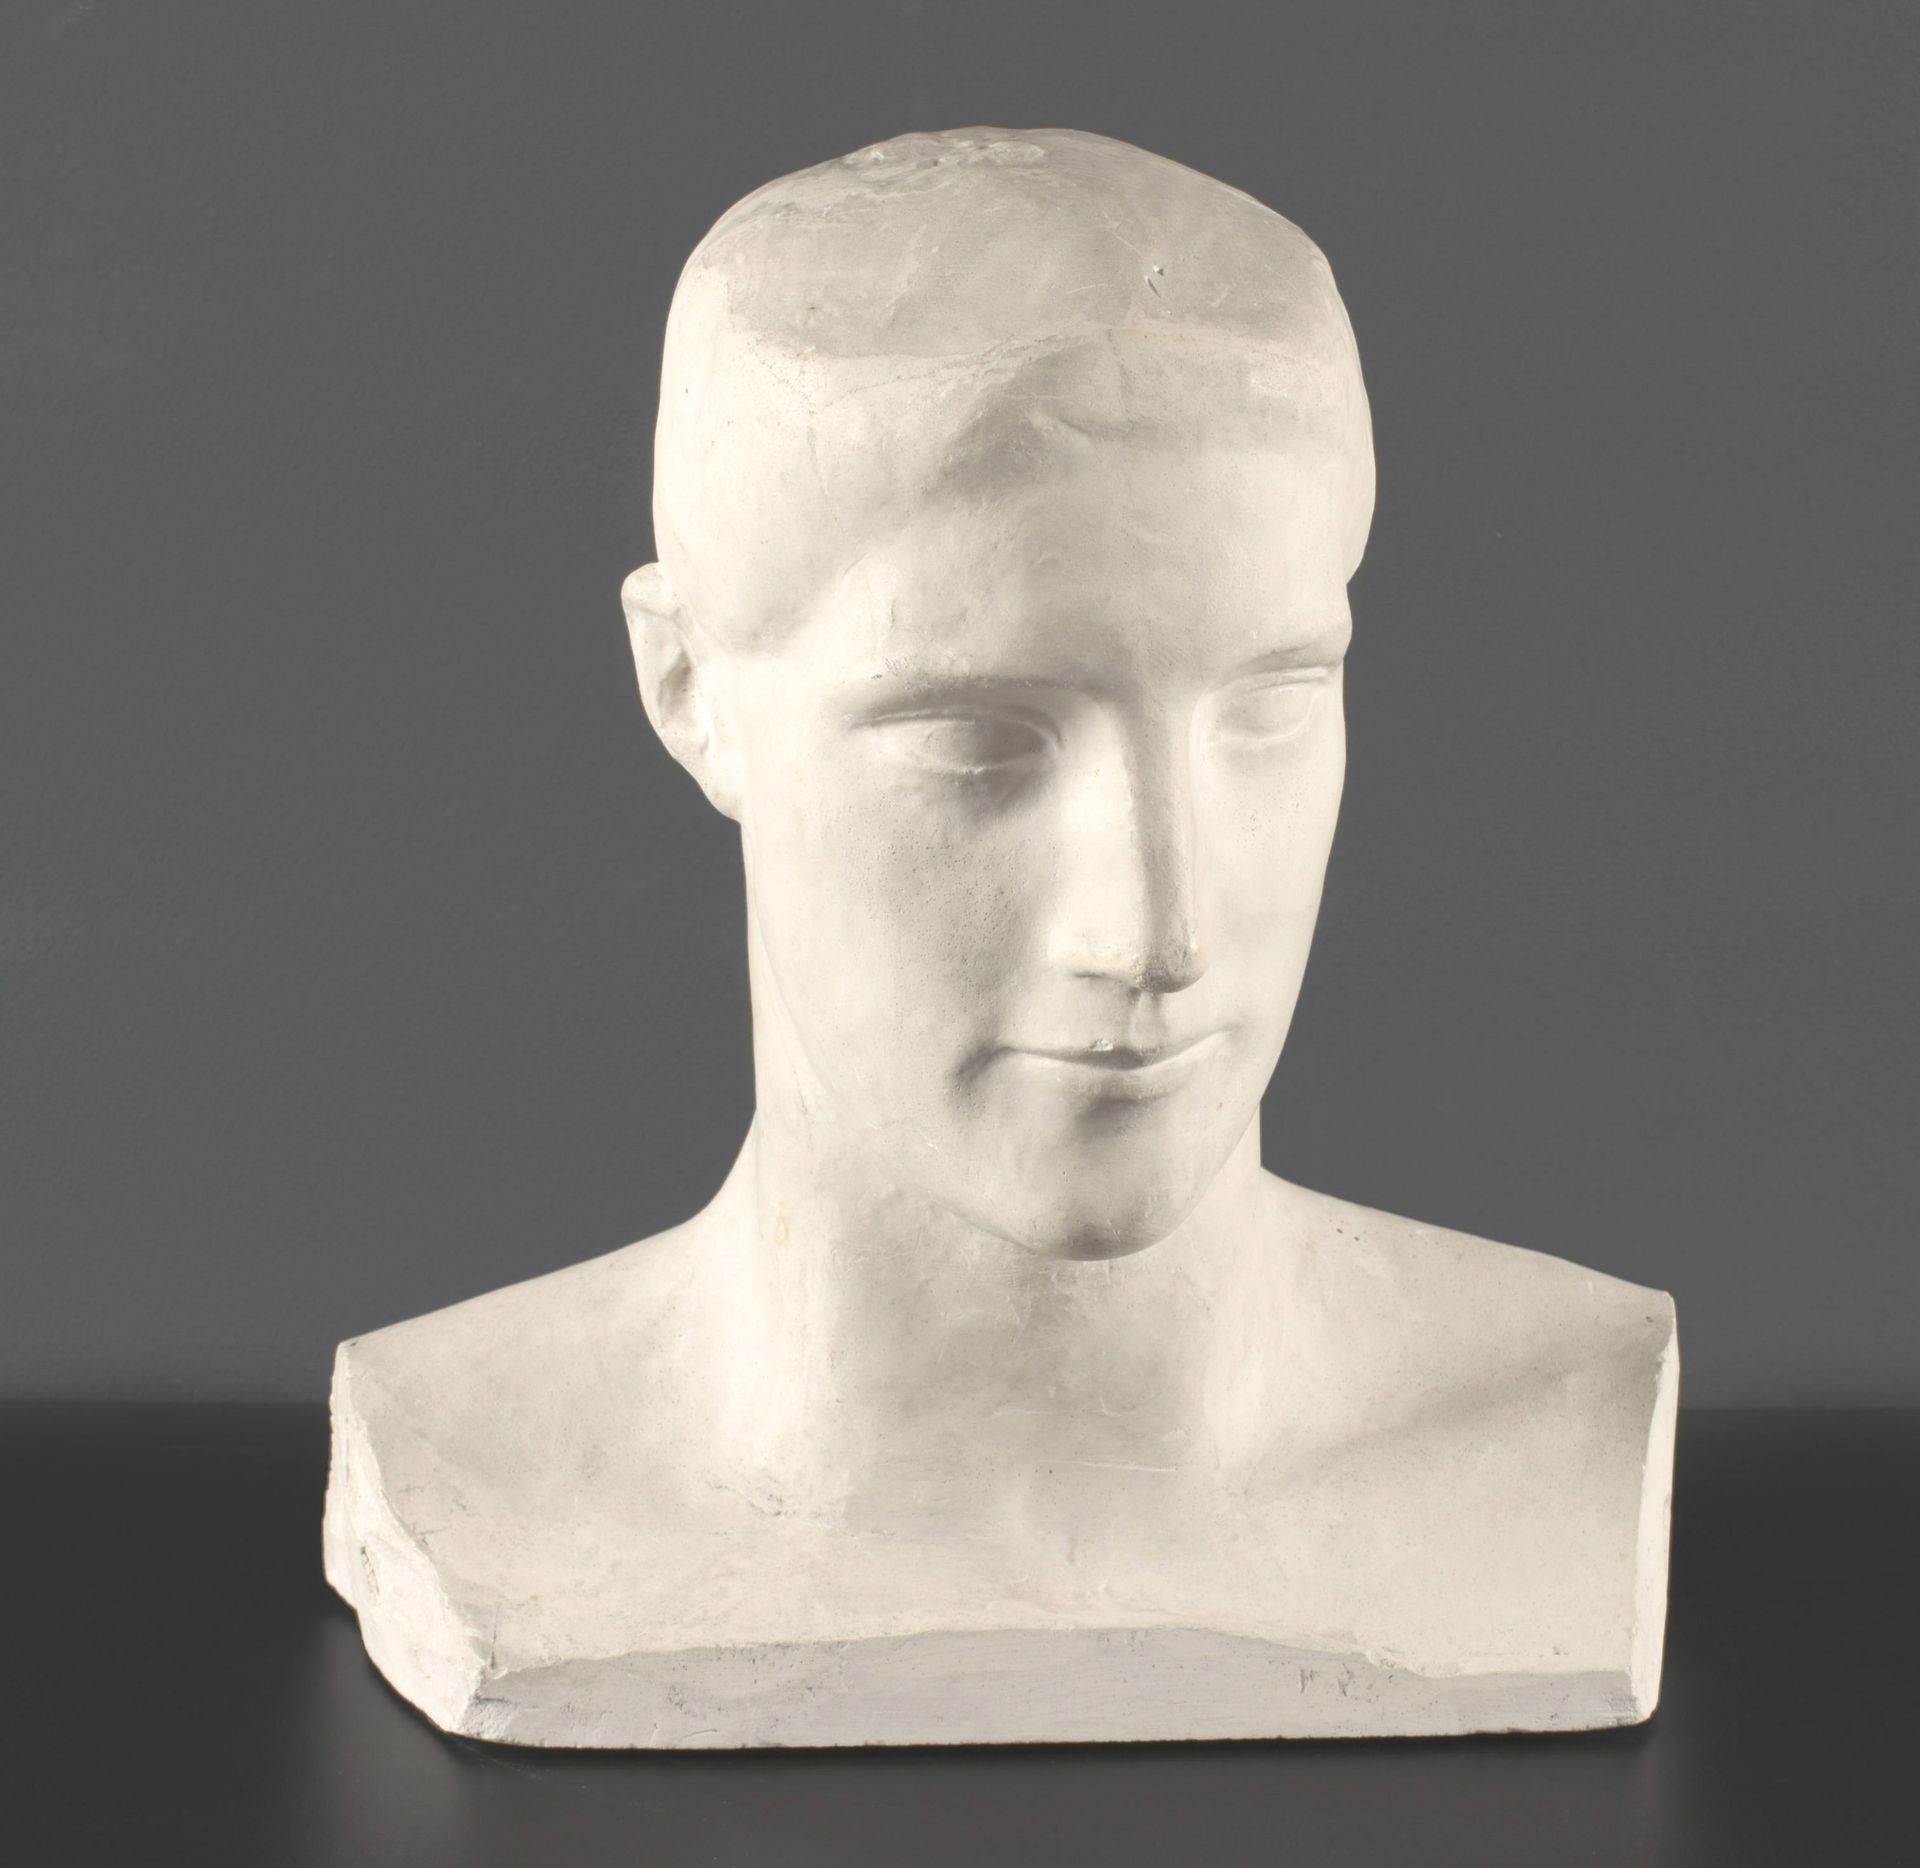 MINNE, Georges (1866-1941) 一个男人的心声

石膏雕塑，高25厘米，长22厘米。设计者：G. Minne